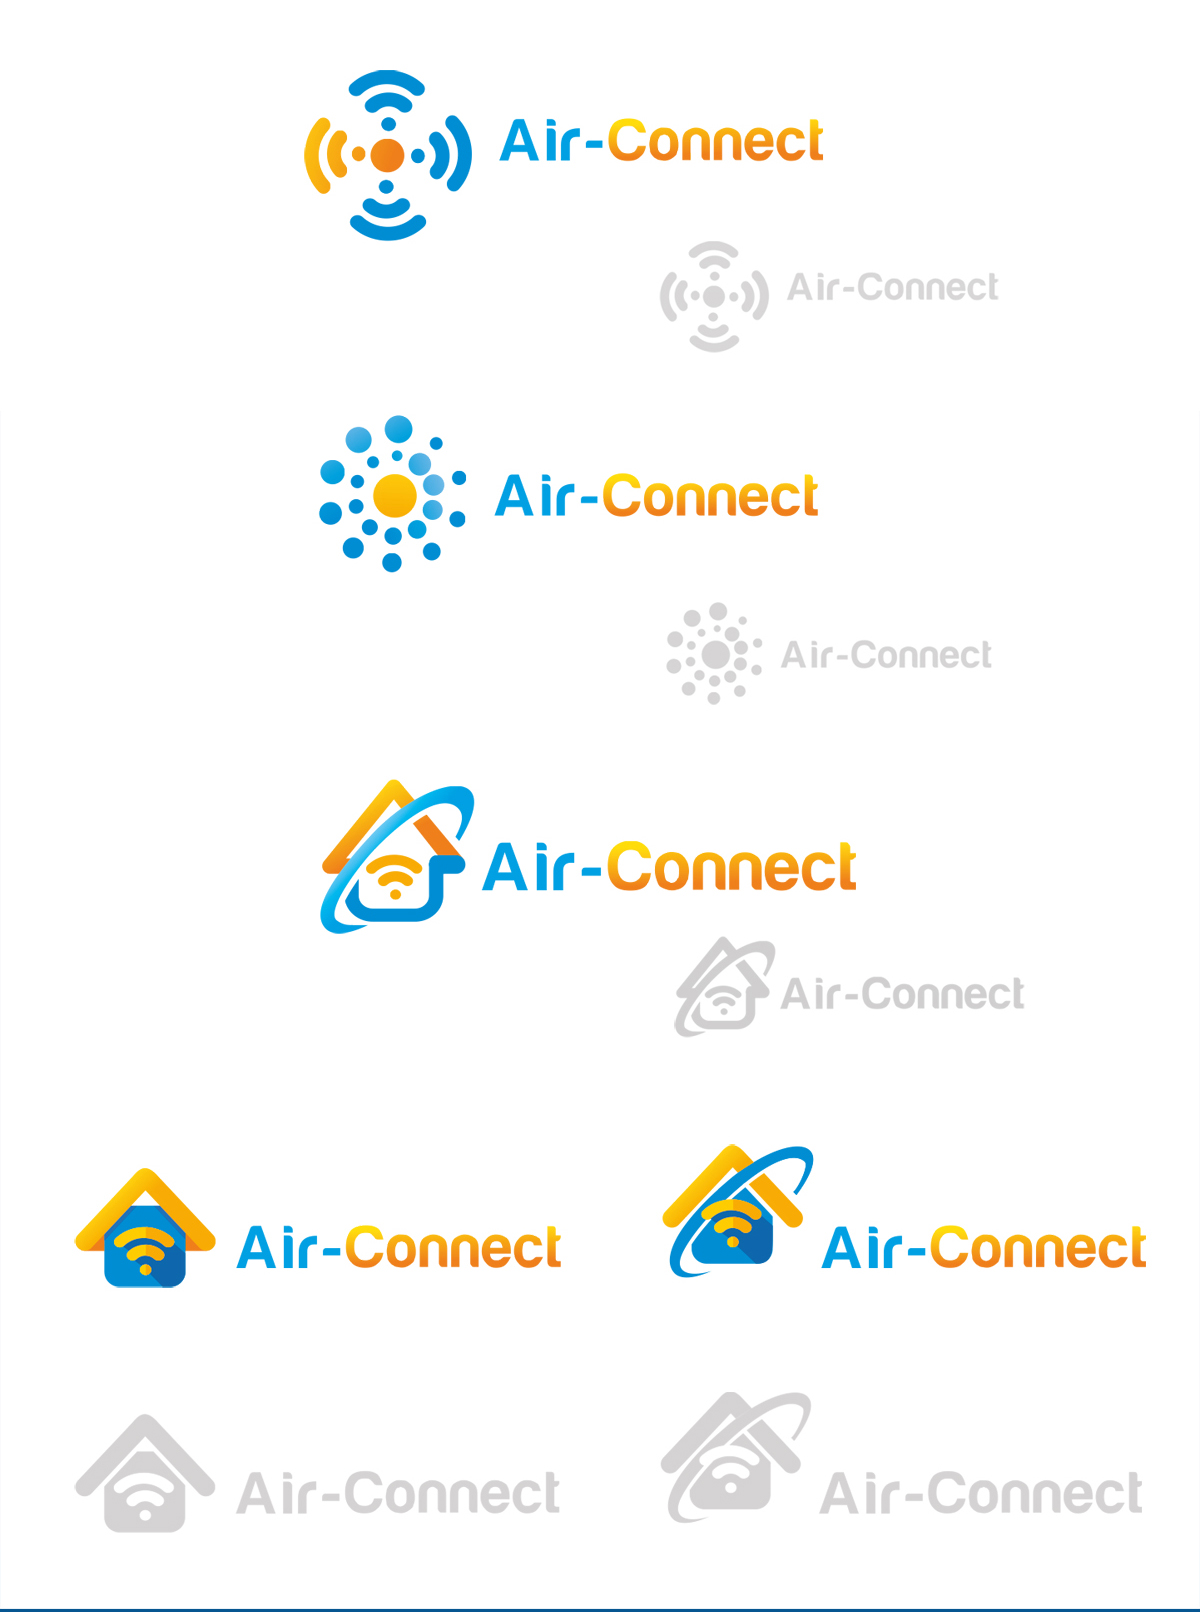 Айра компания дизайна. Connected air